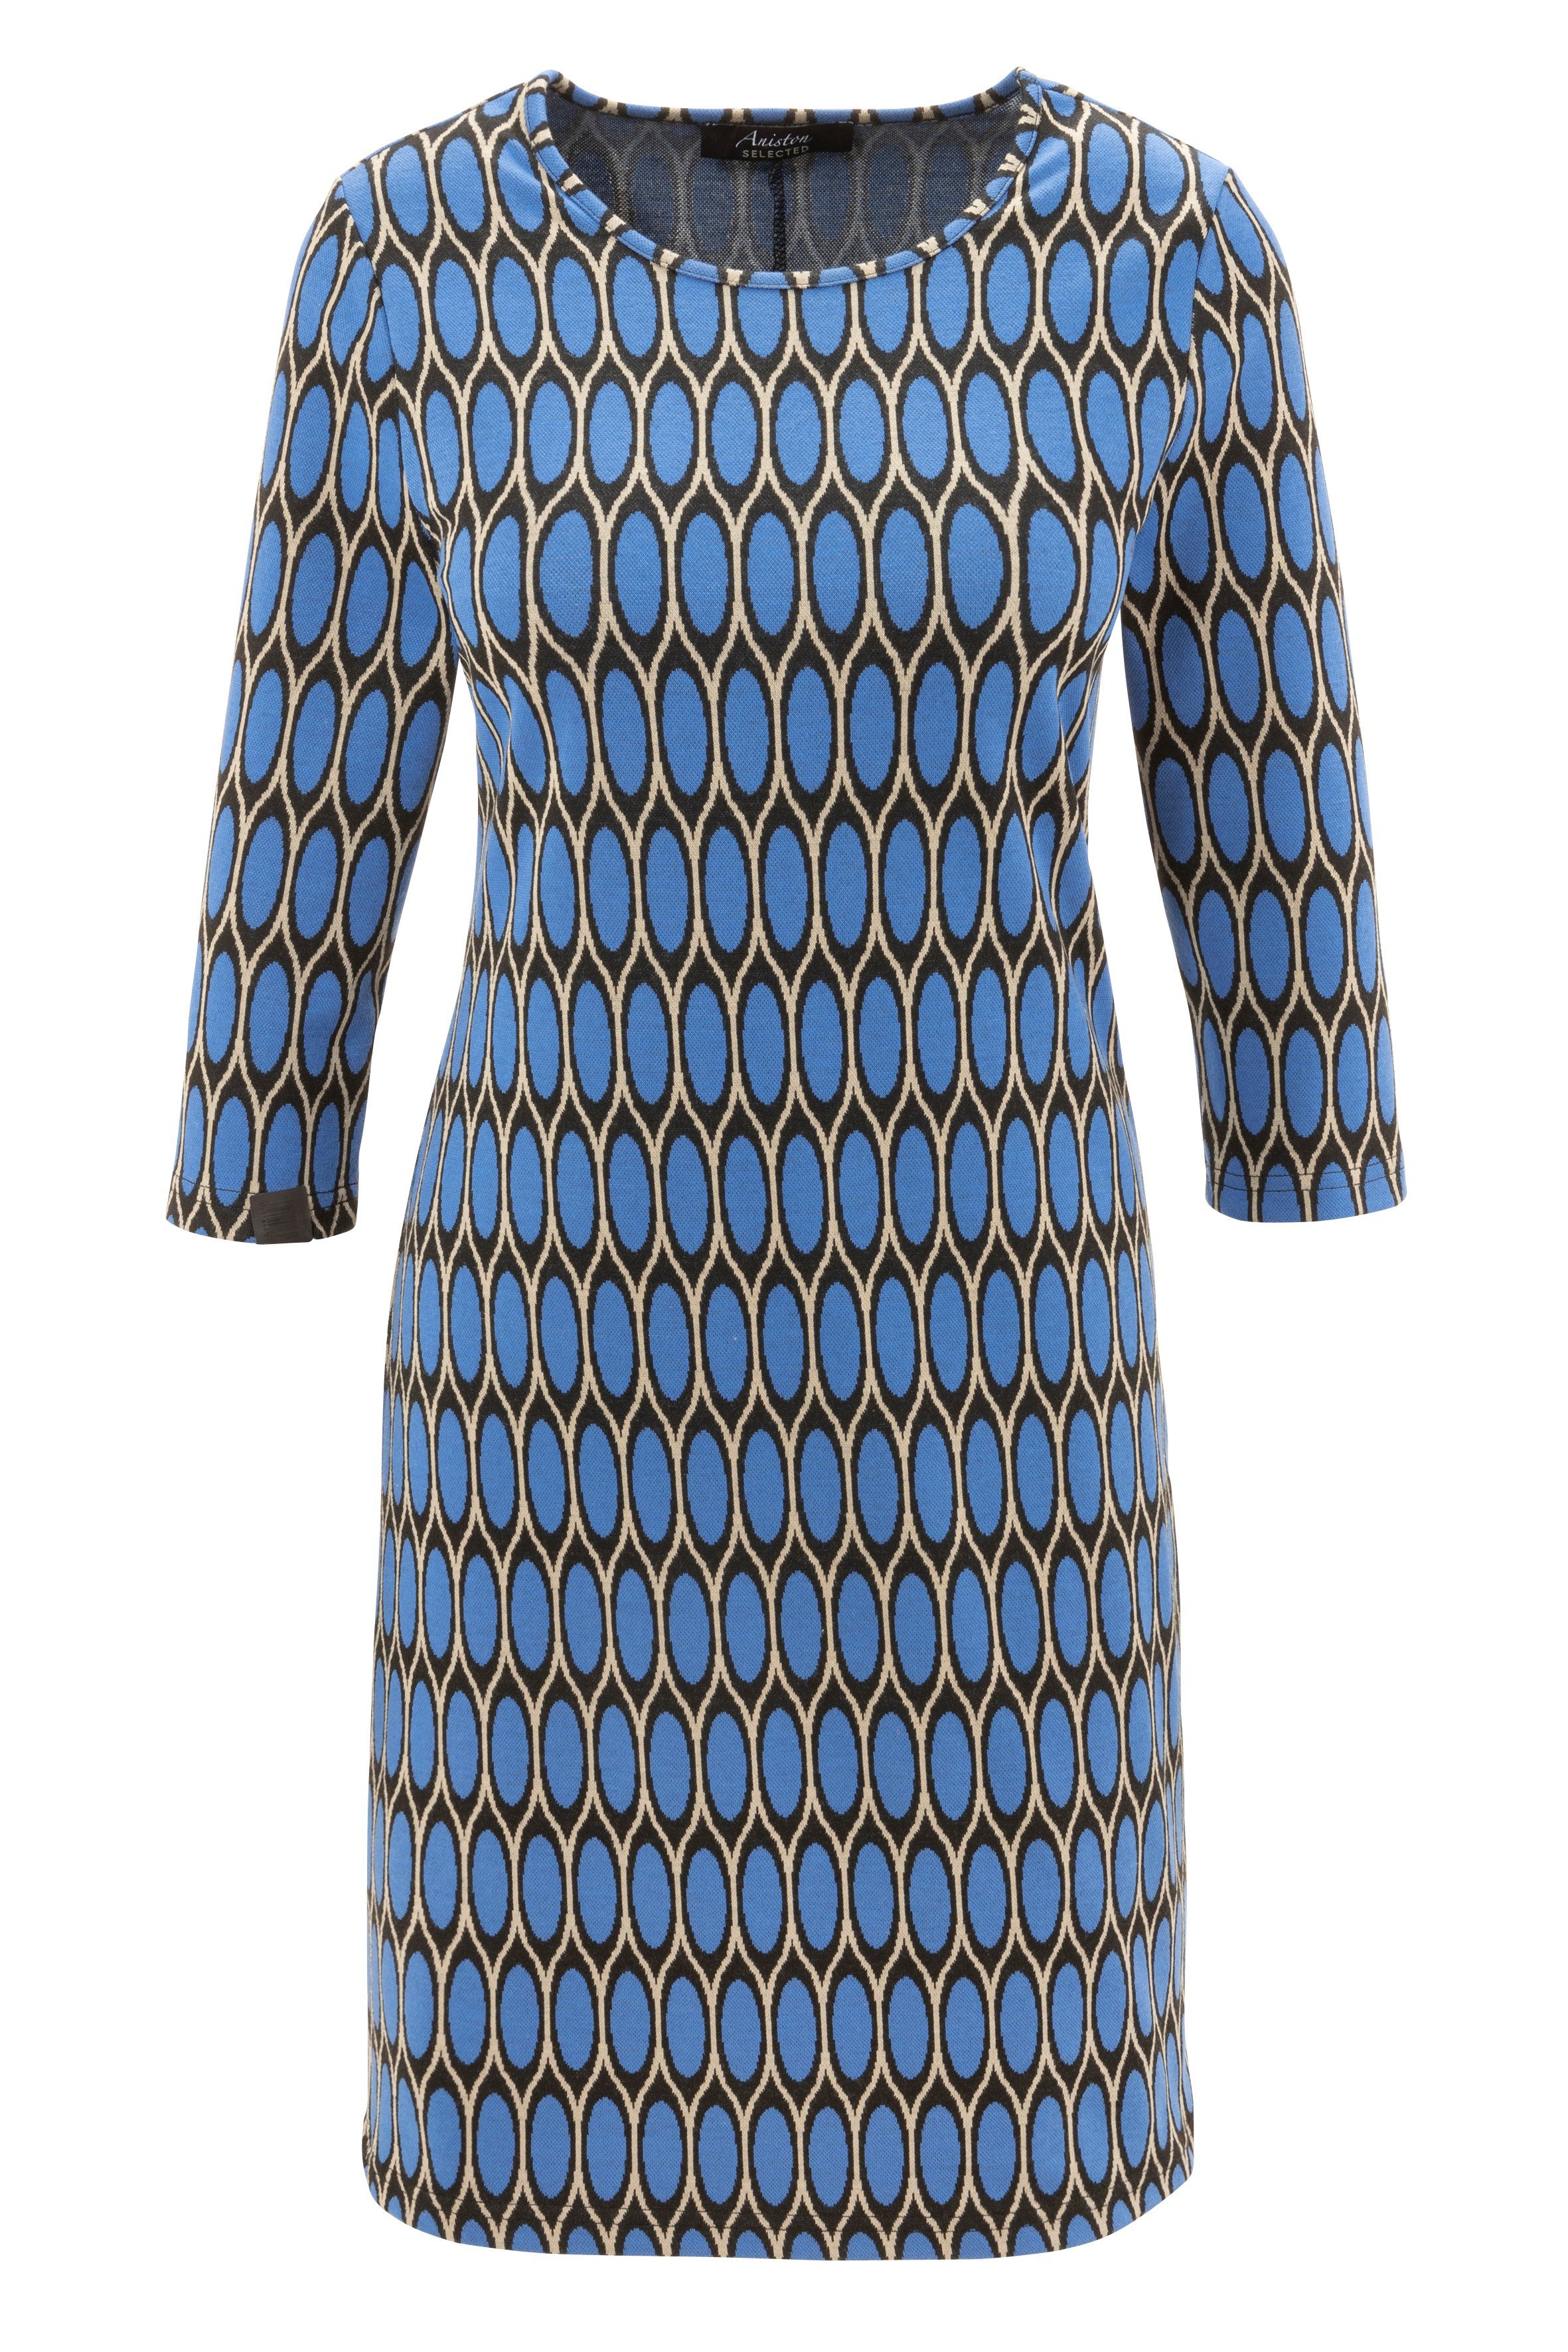 Aniston Jerseykleid SELECTED Jacquard aus mit Retro-Muster